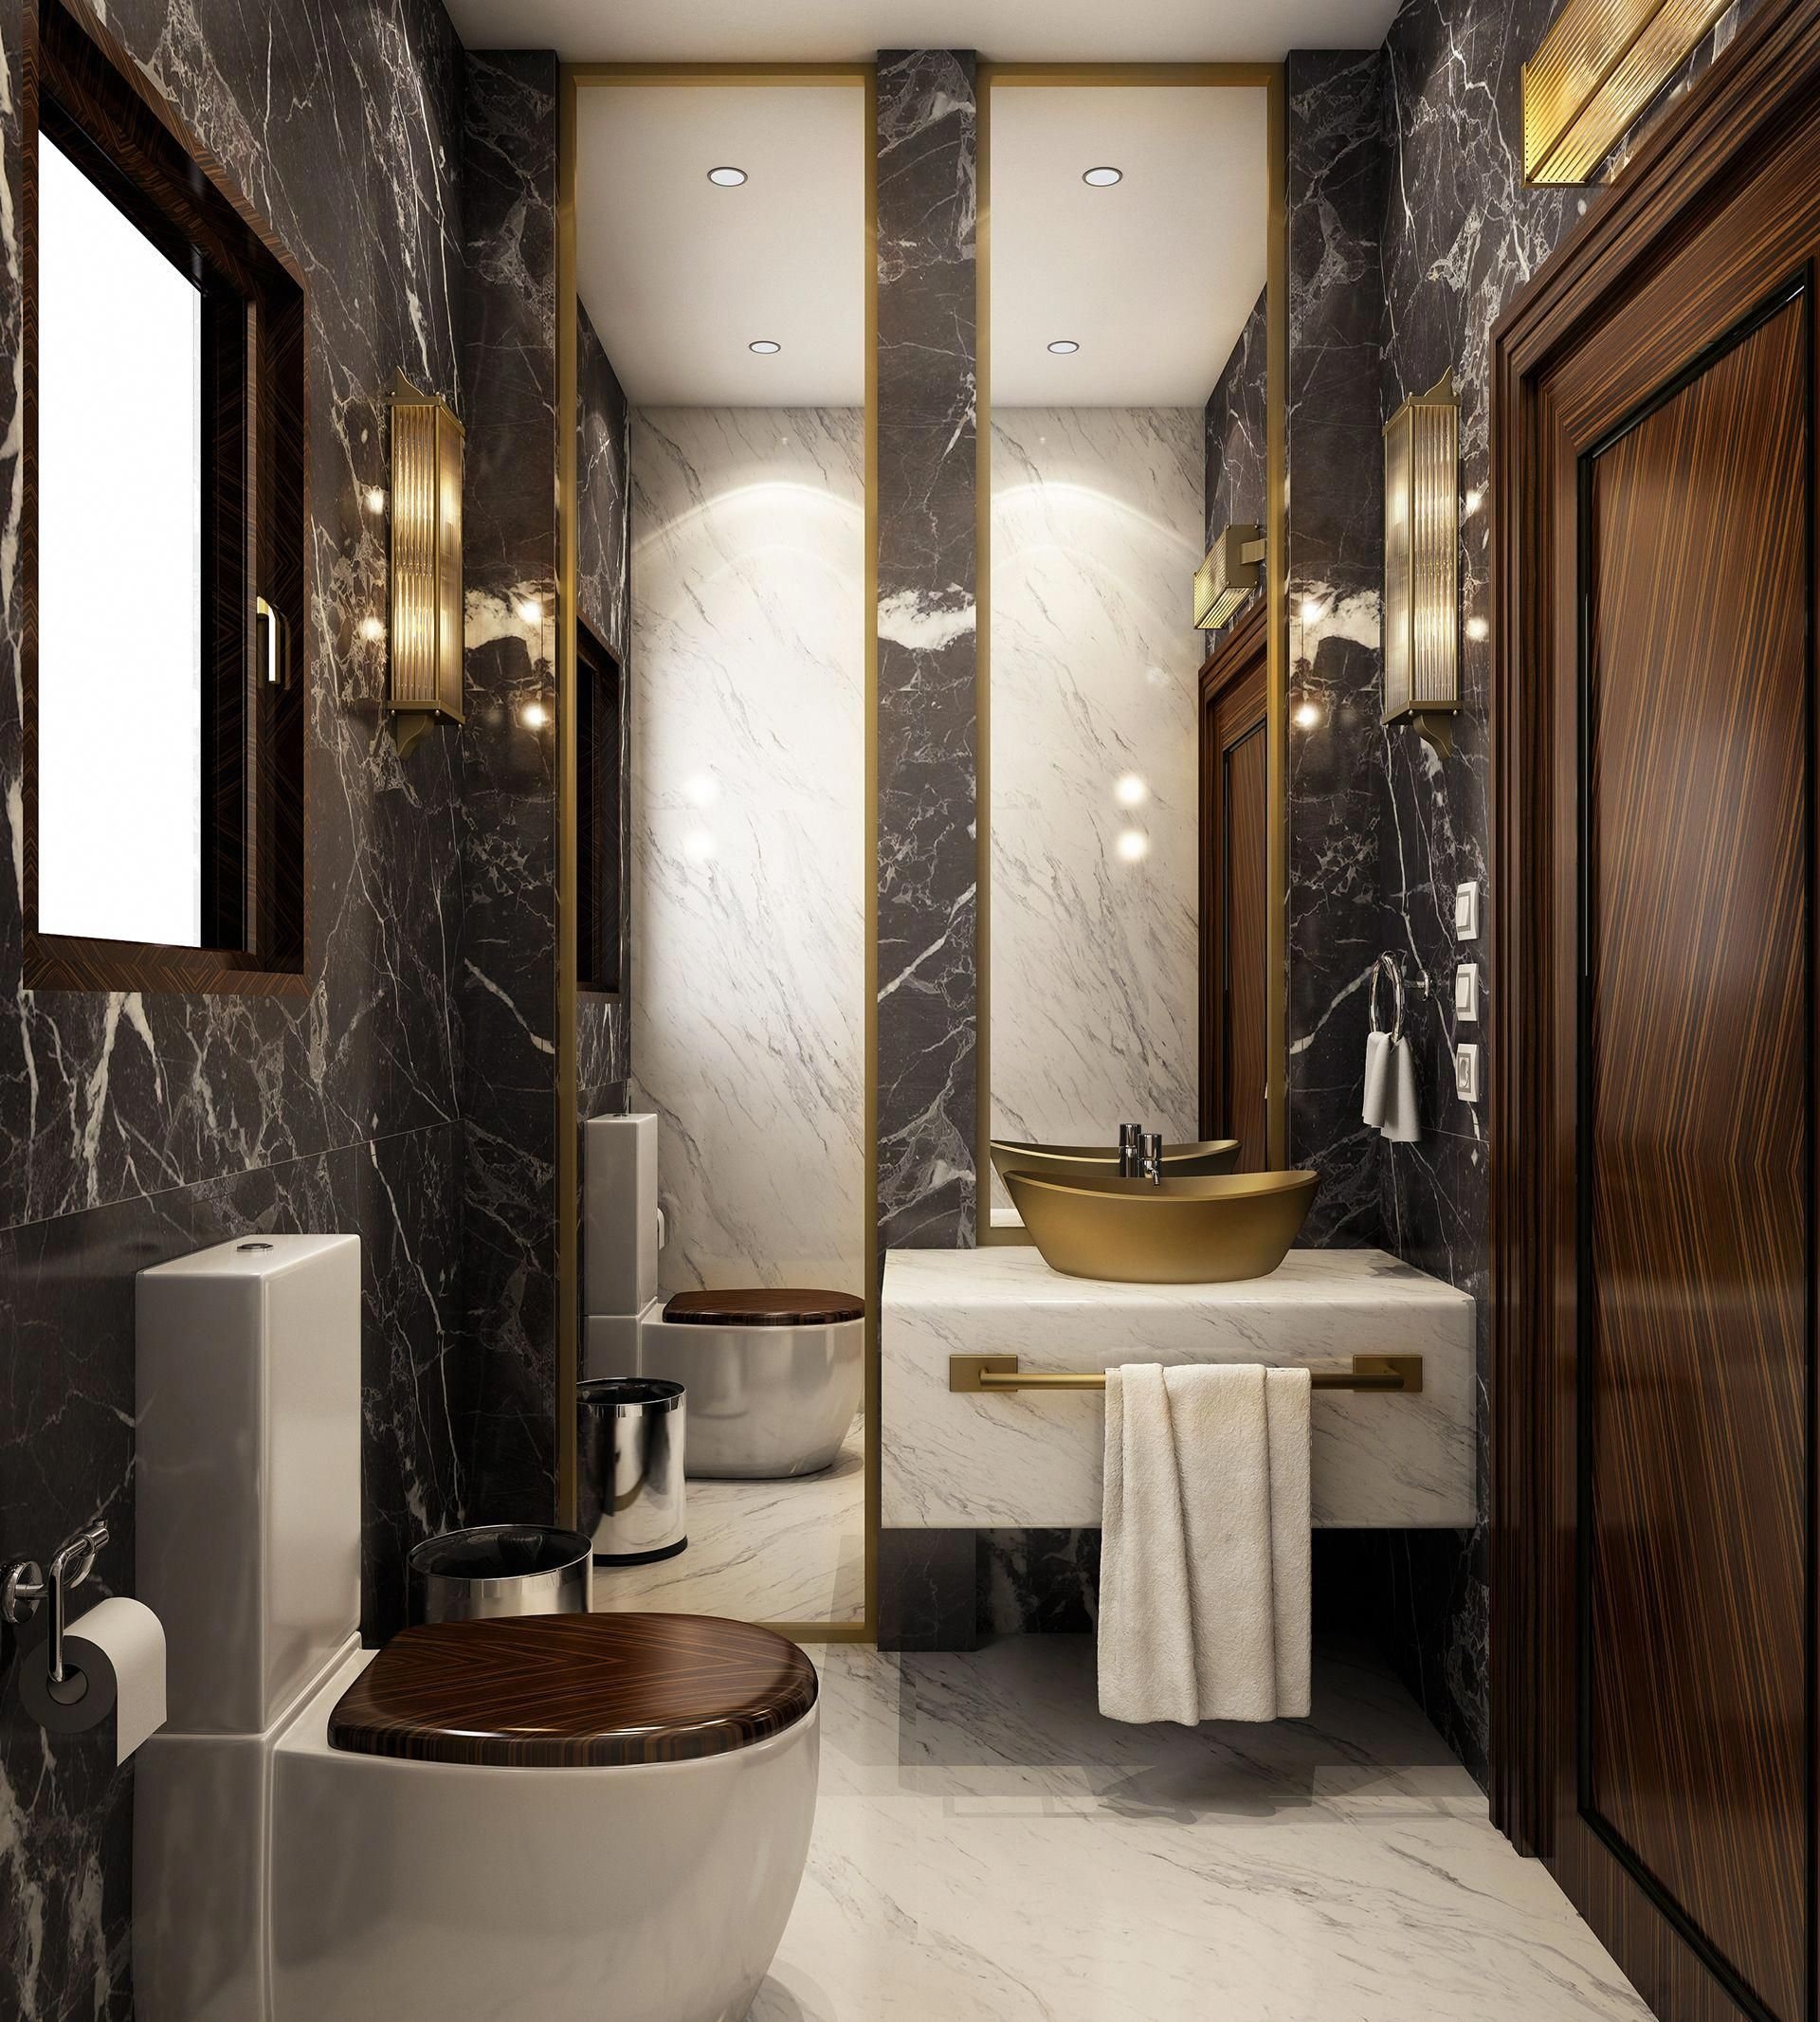 Ванная комната в стиле арт деко фото в интерьере